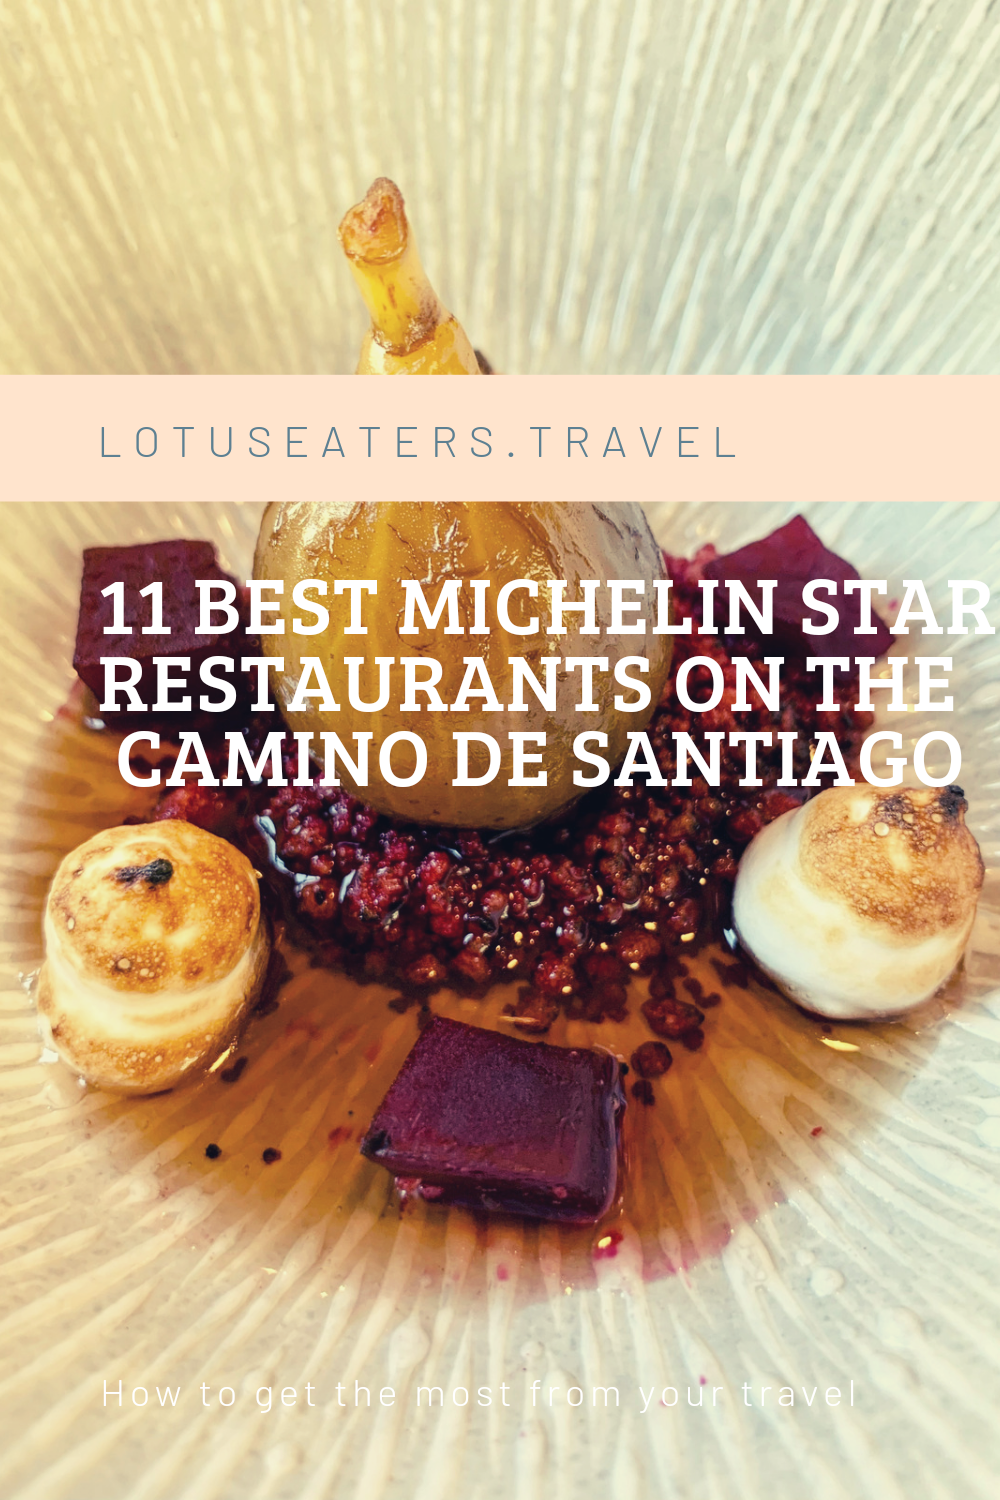 11 Best Michelin Star Restaurants on the Camino de Santiago